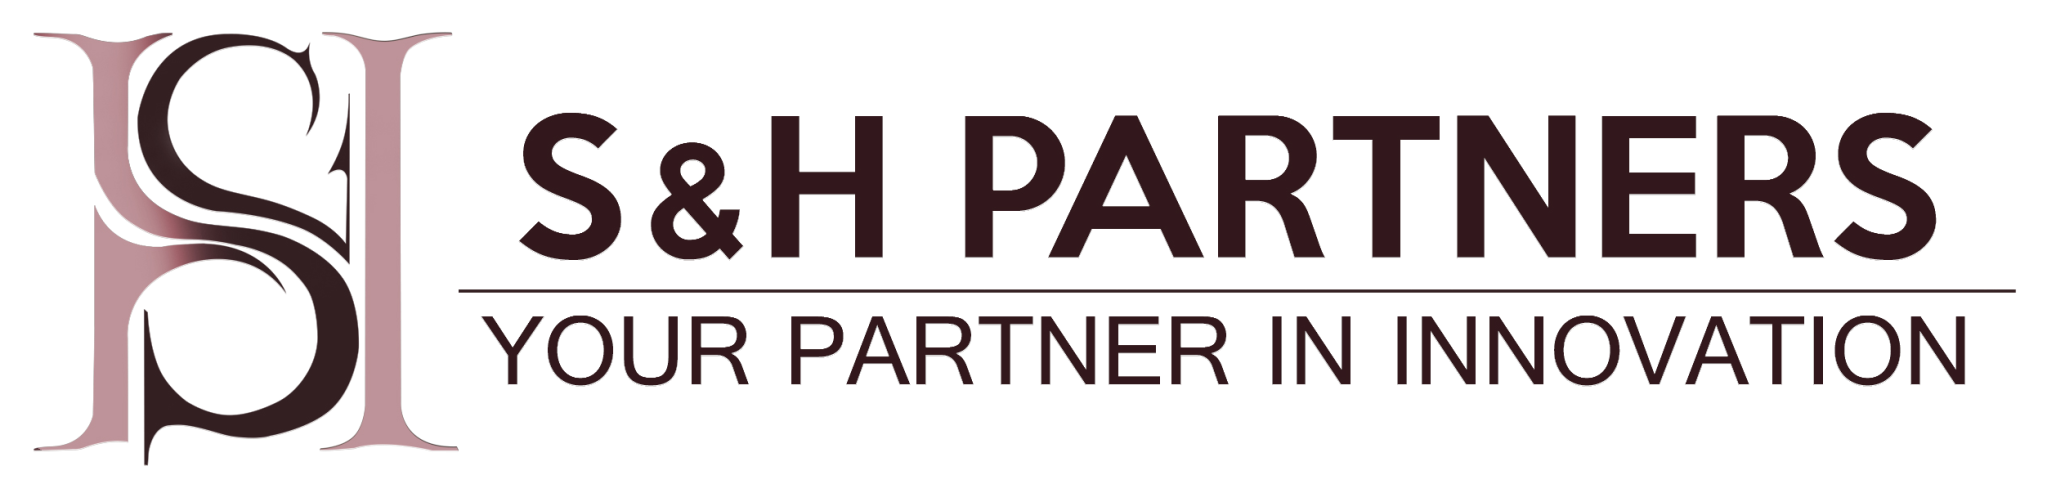 S&H partners